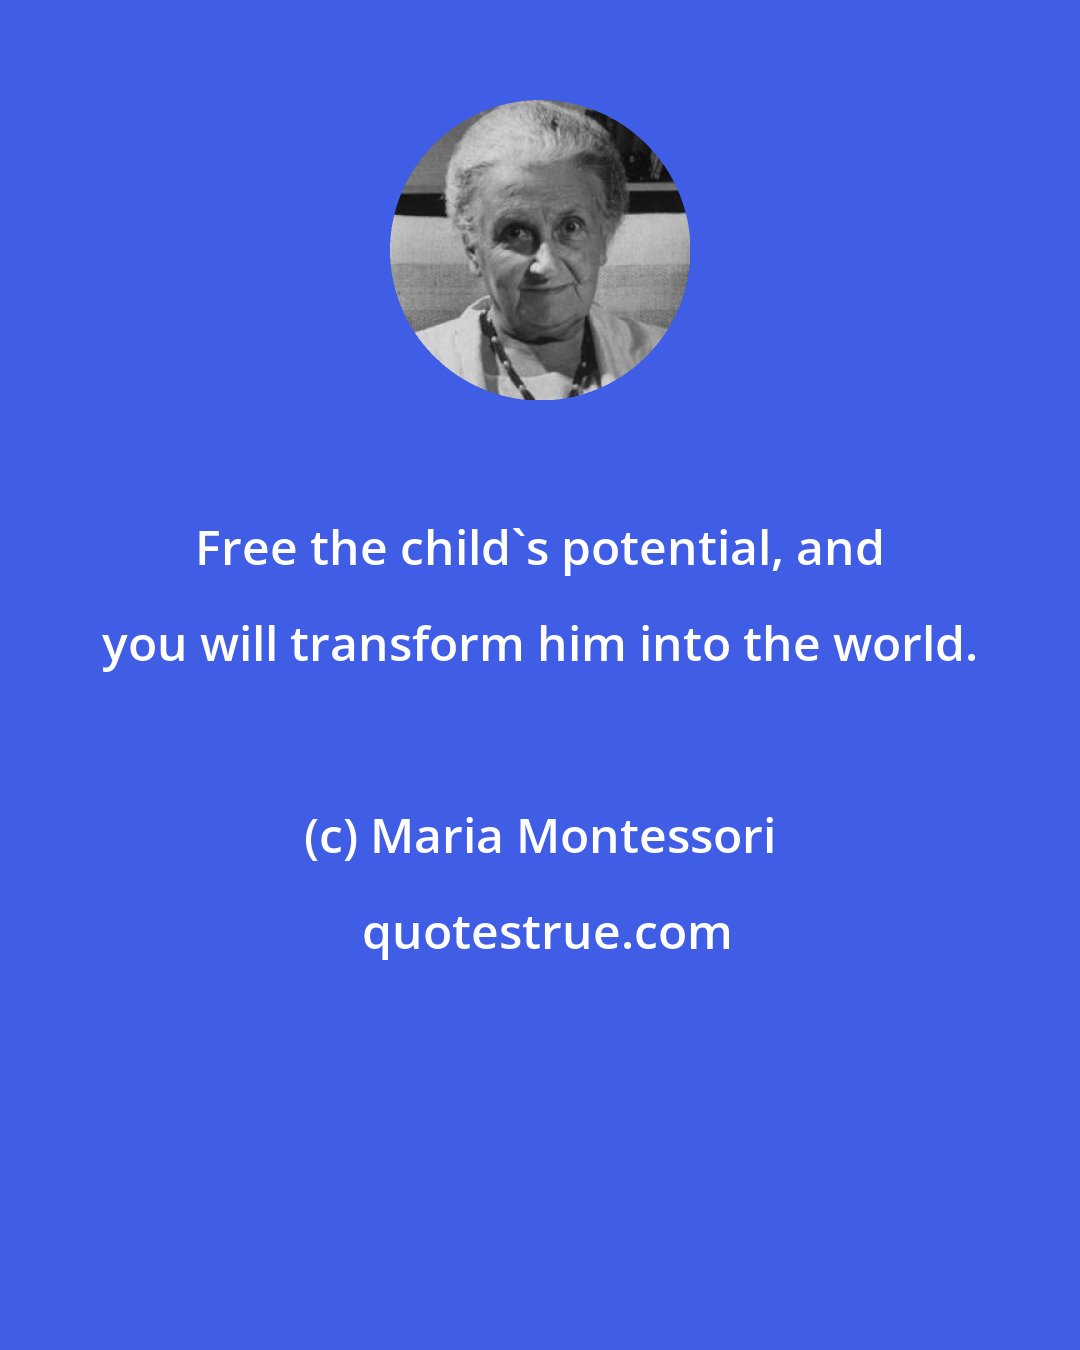 Maria Montessori: Free the child's potential, and you will transform him into the world.